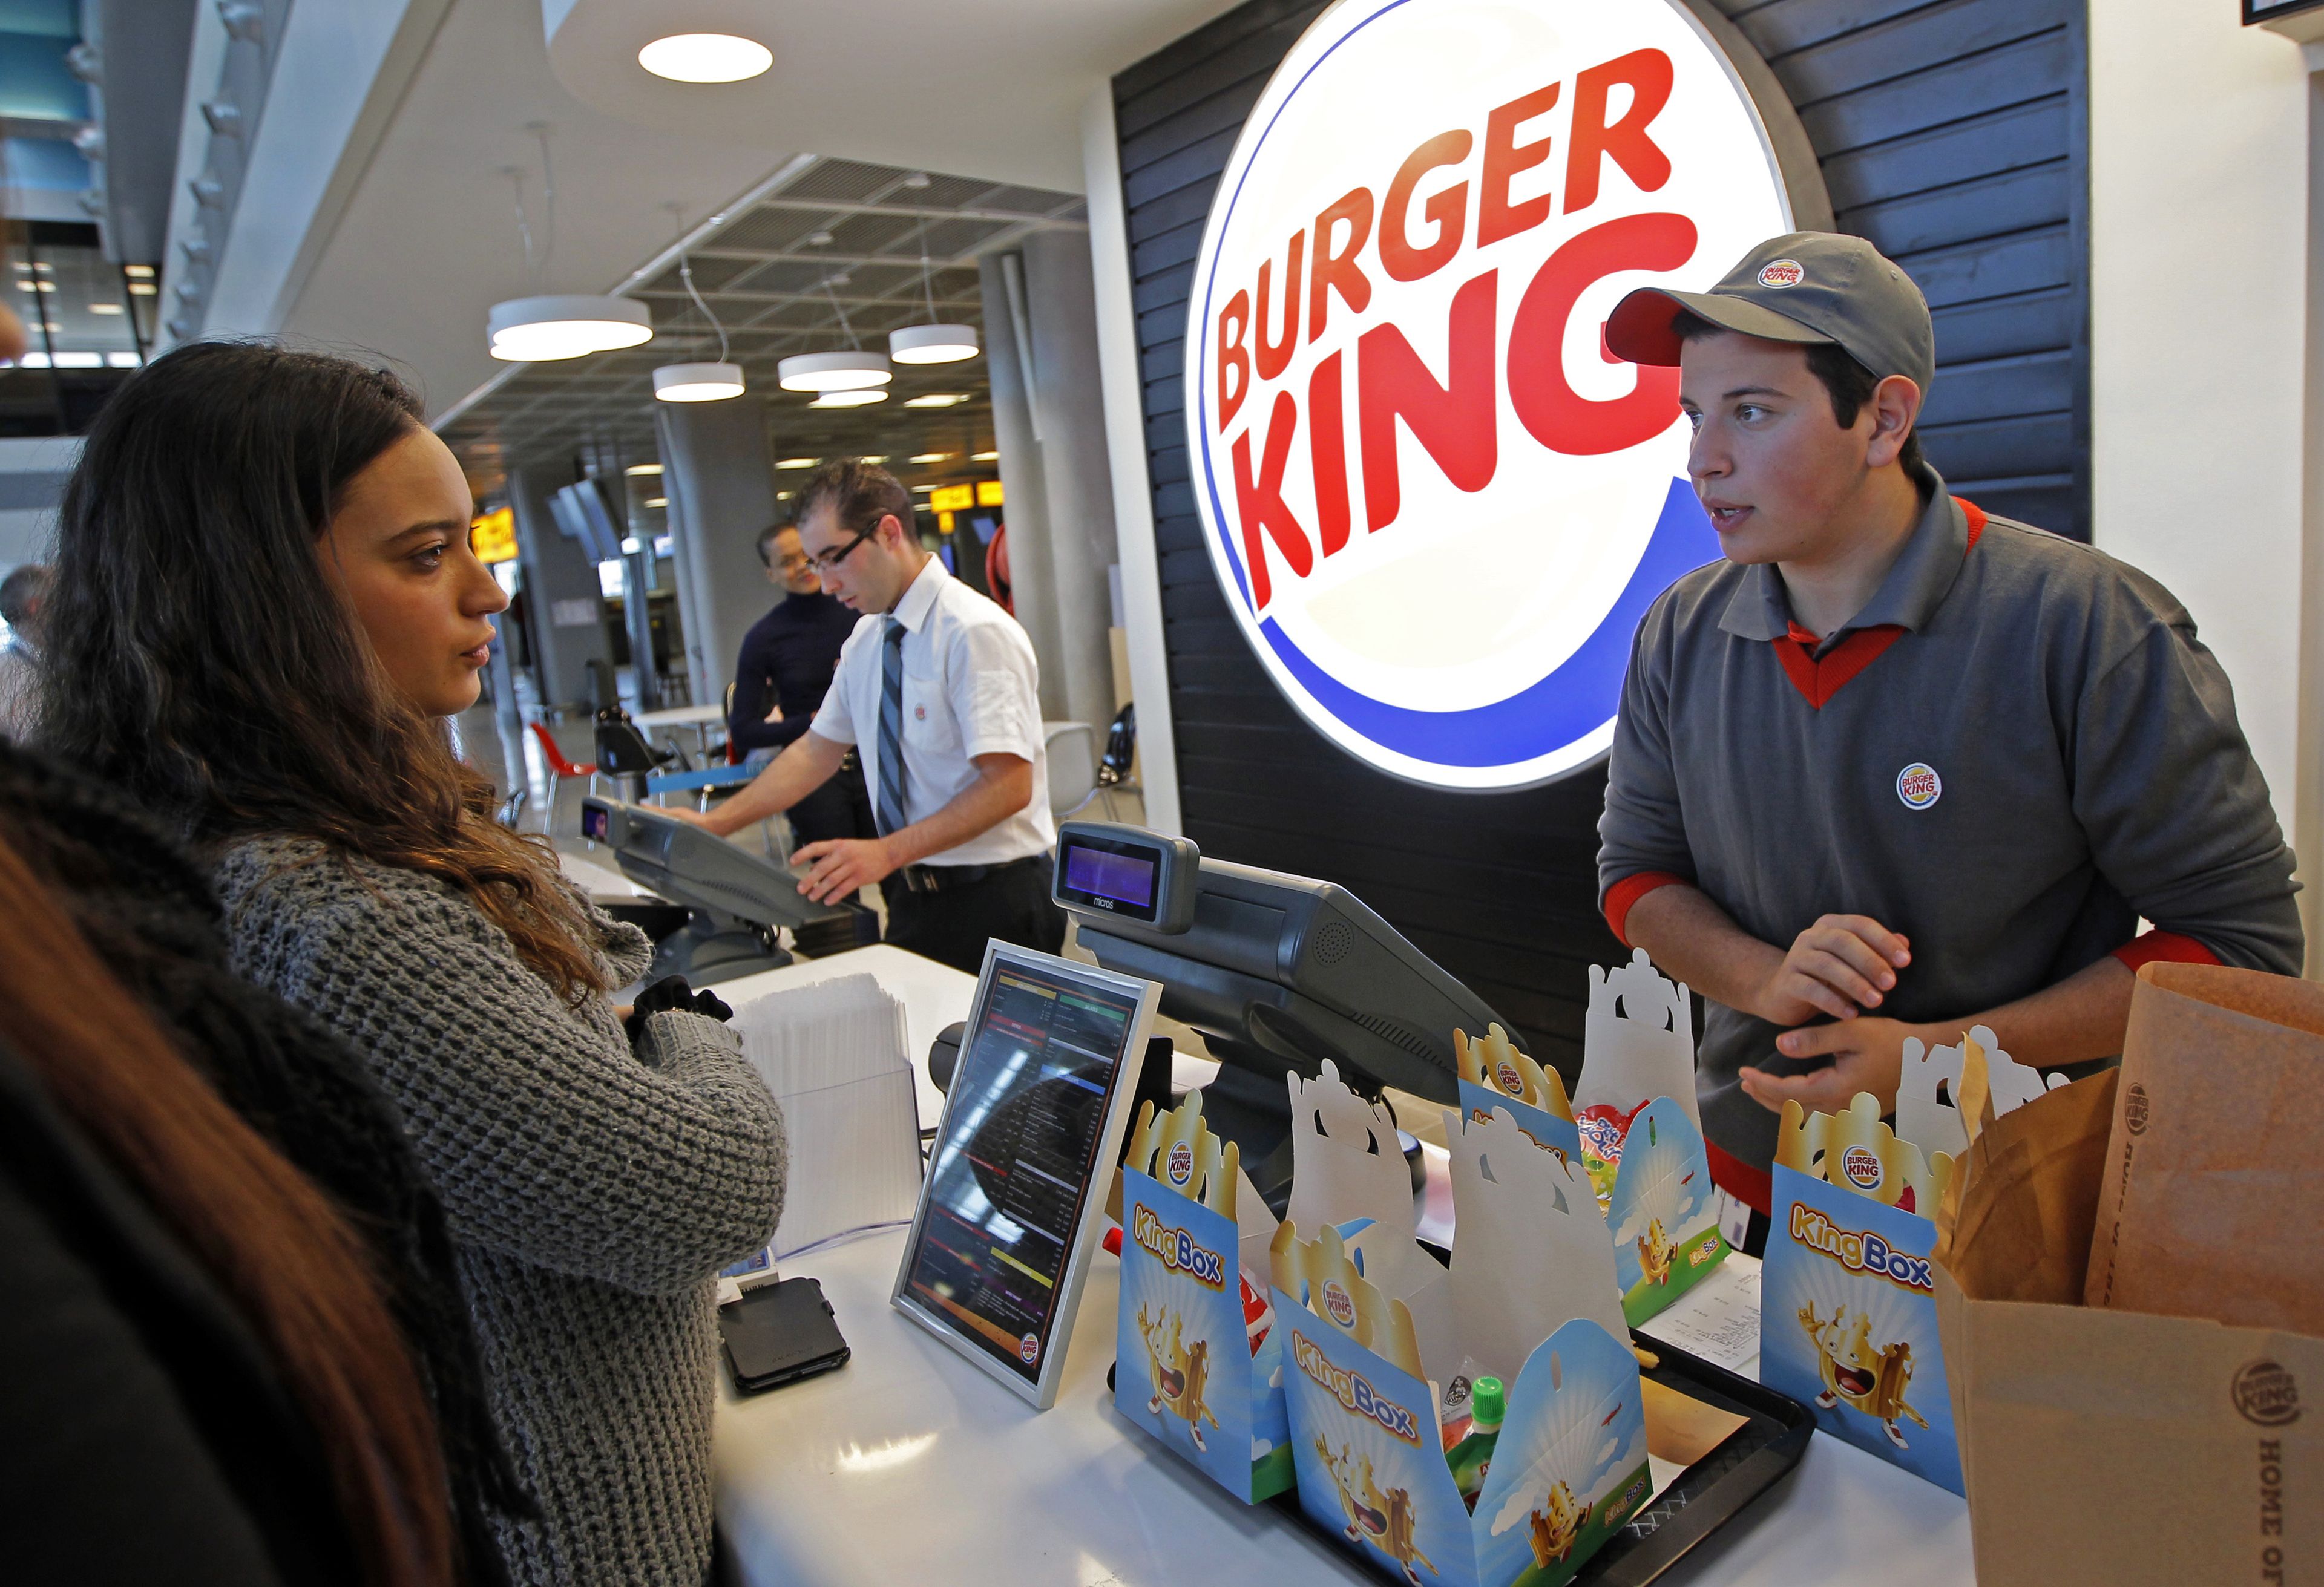 Mejores productos del Burger king